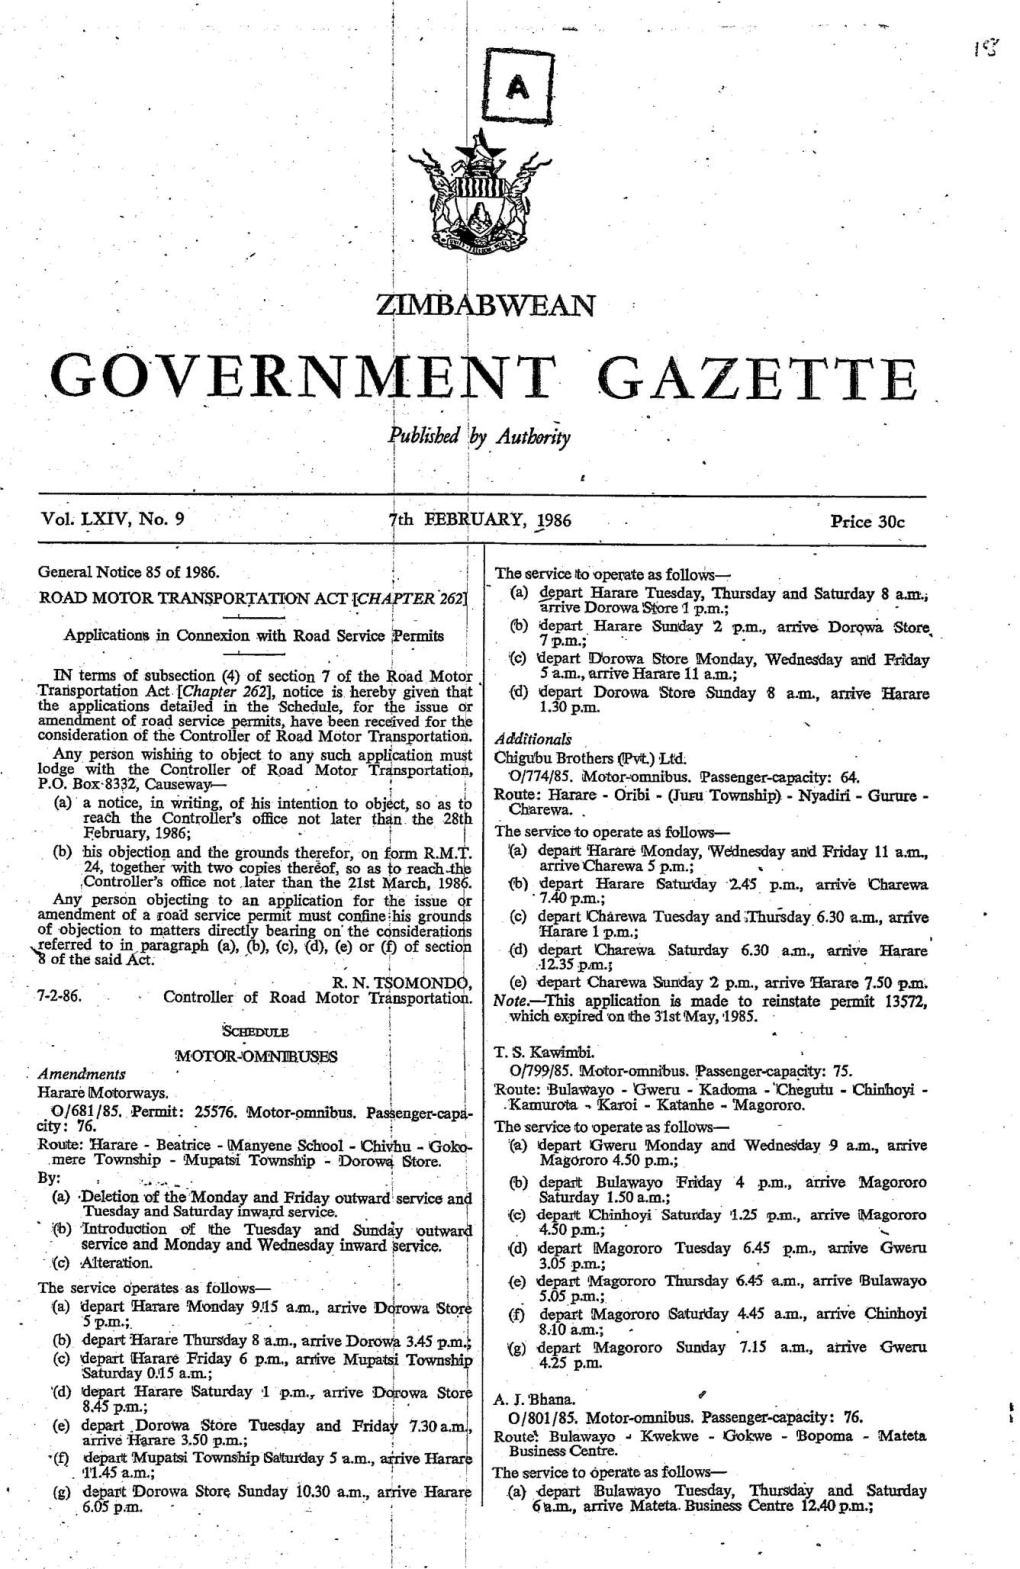 'Government Gazette